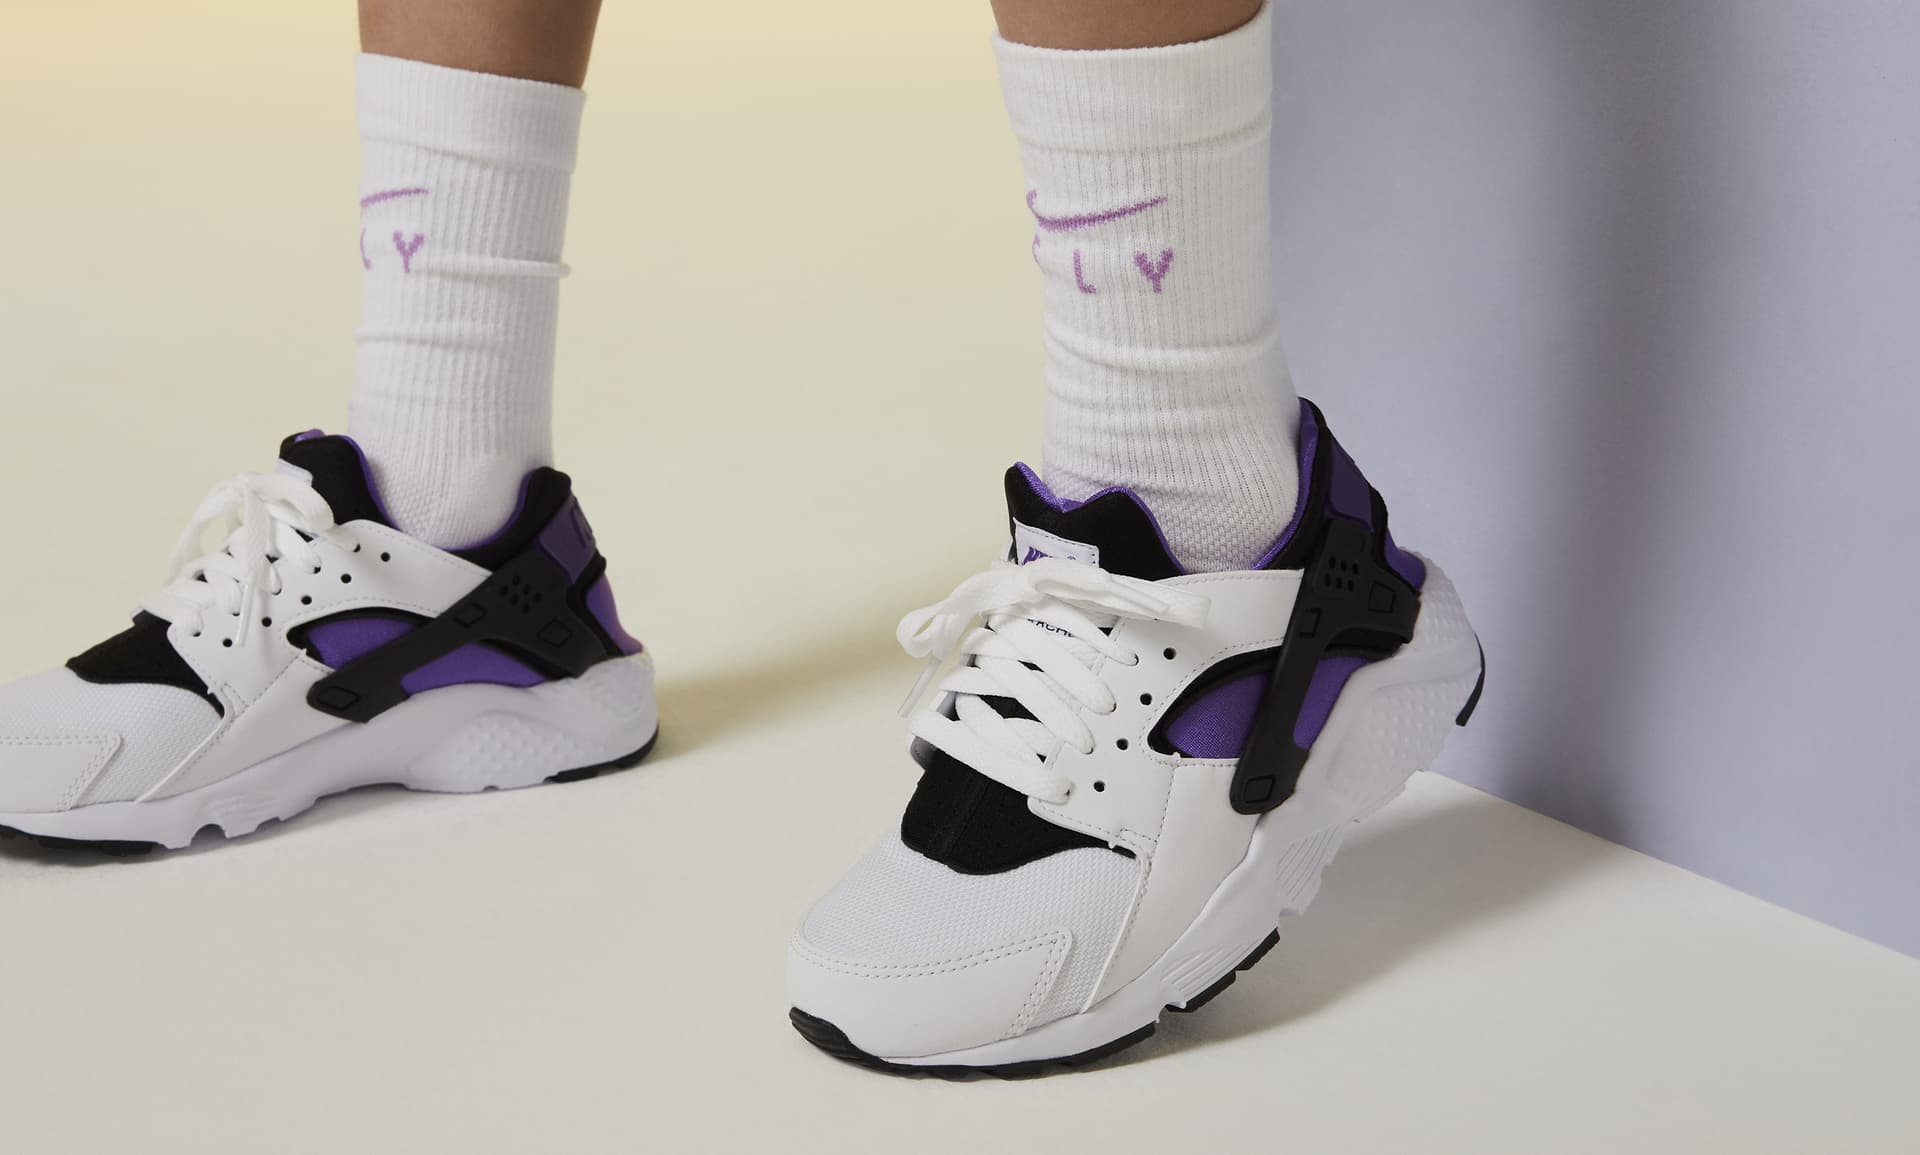 Nike Huarache Run Older Kids' Shoes - White